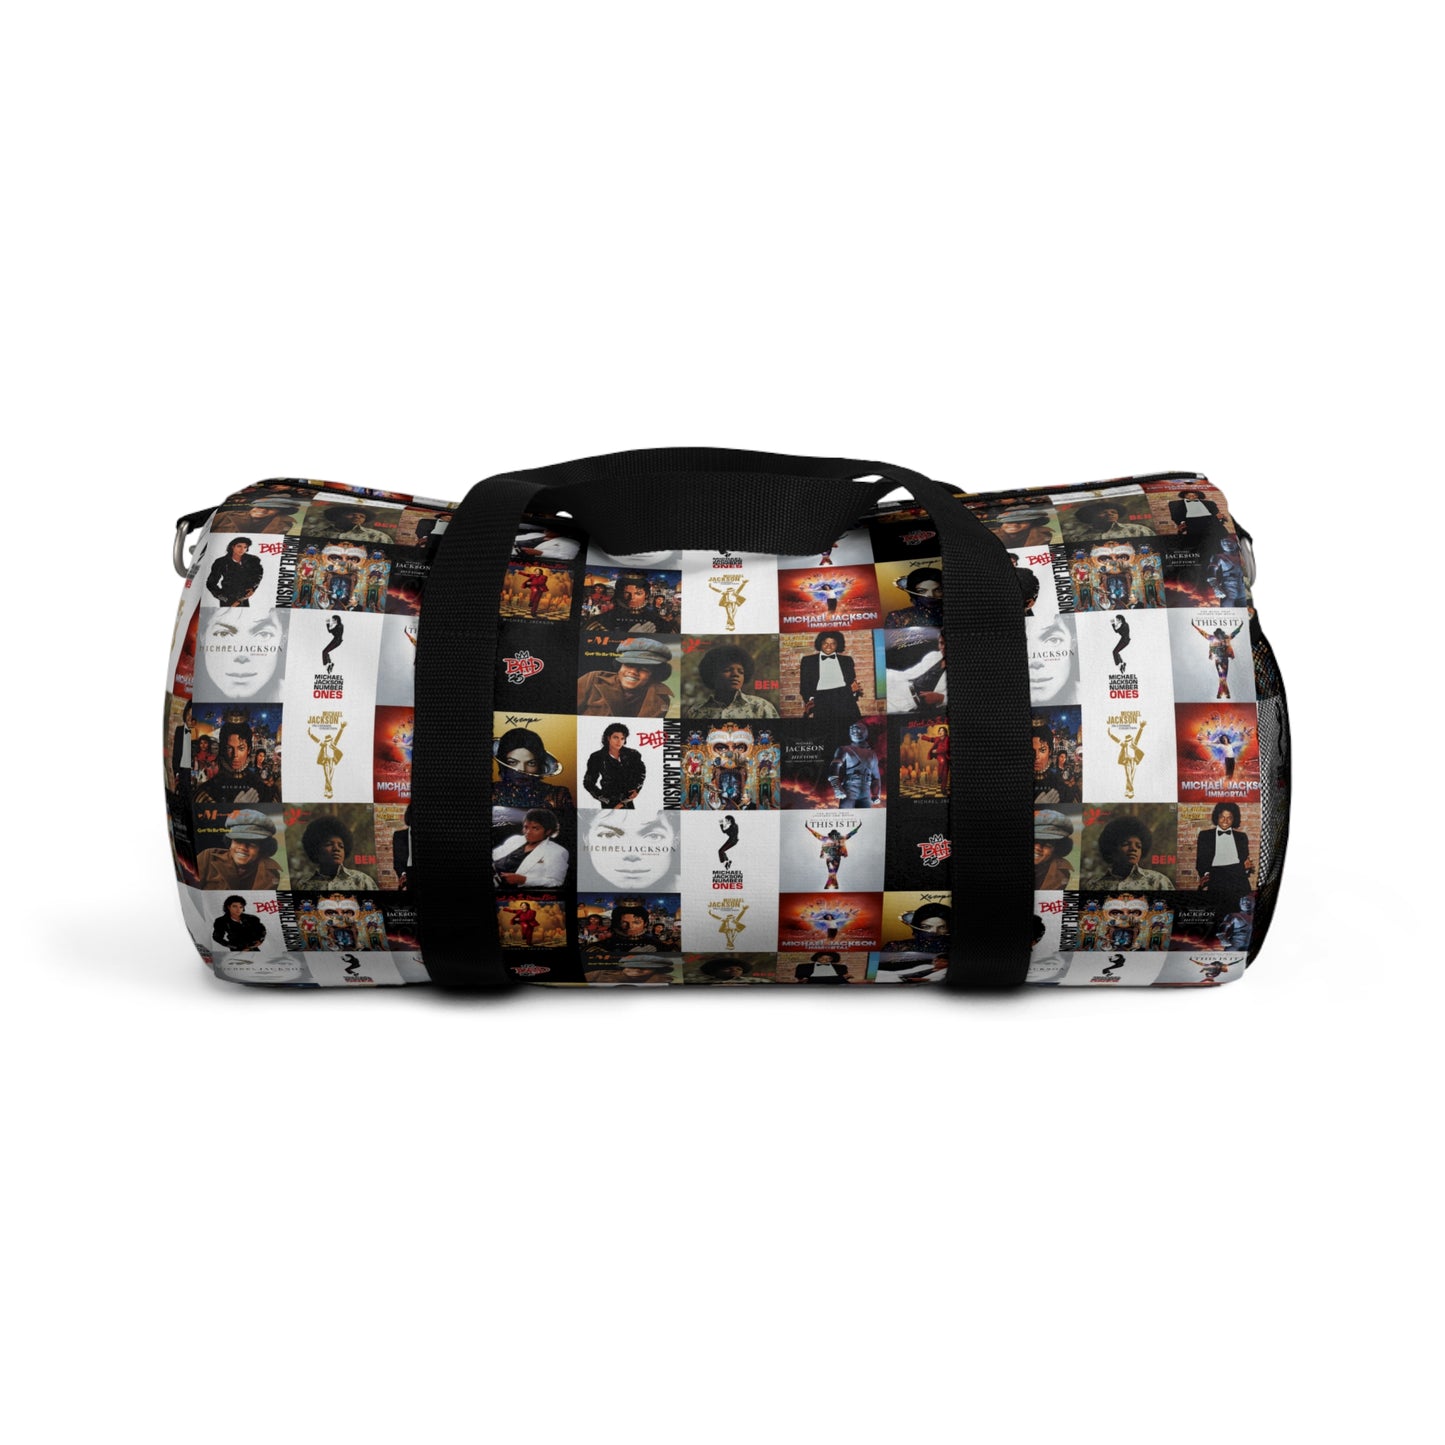 Michael Jackson Album Cover Collage Duffel Bag